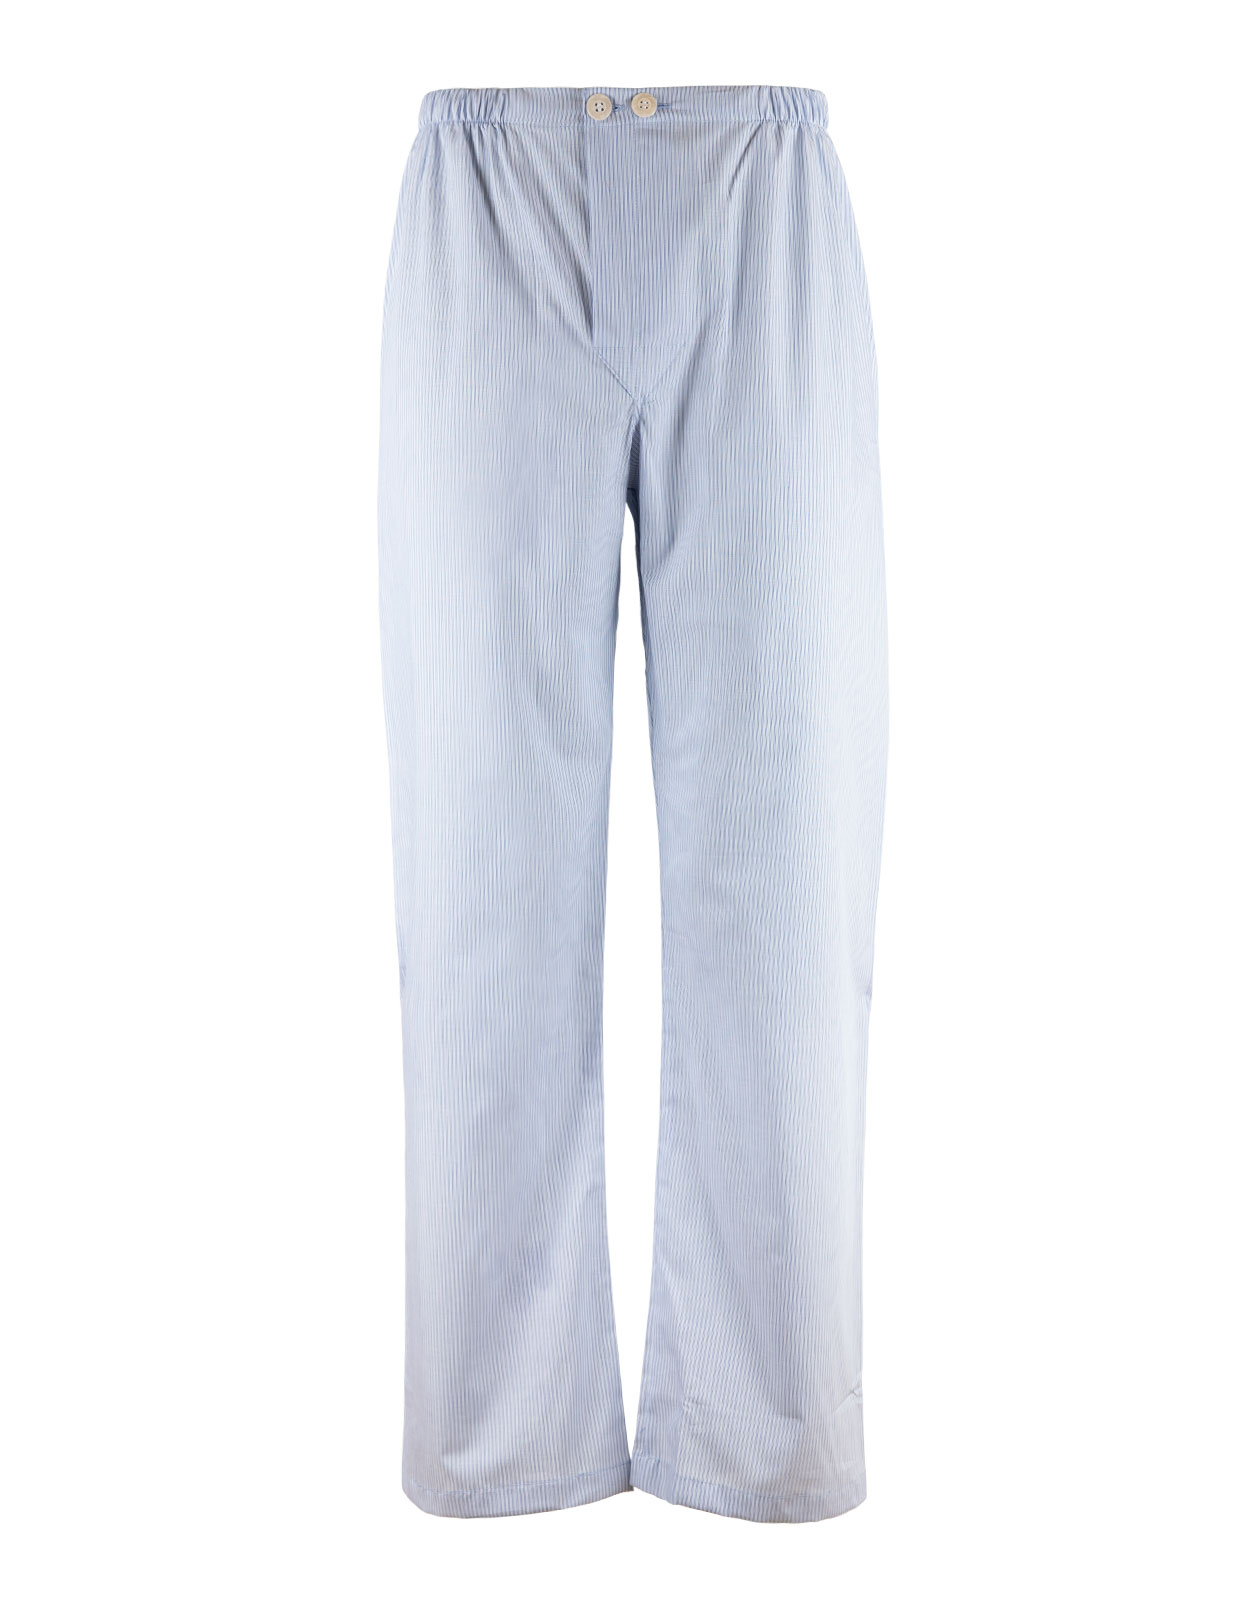 Saville Pyjamas Blå Stl 52